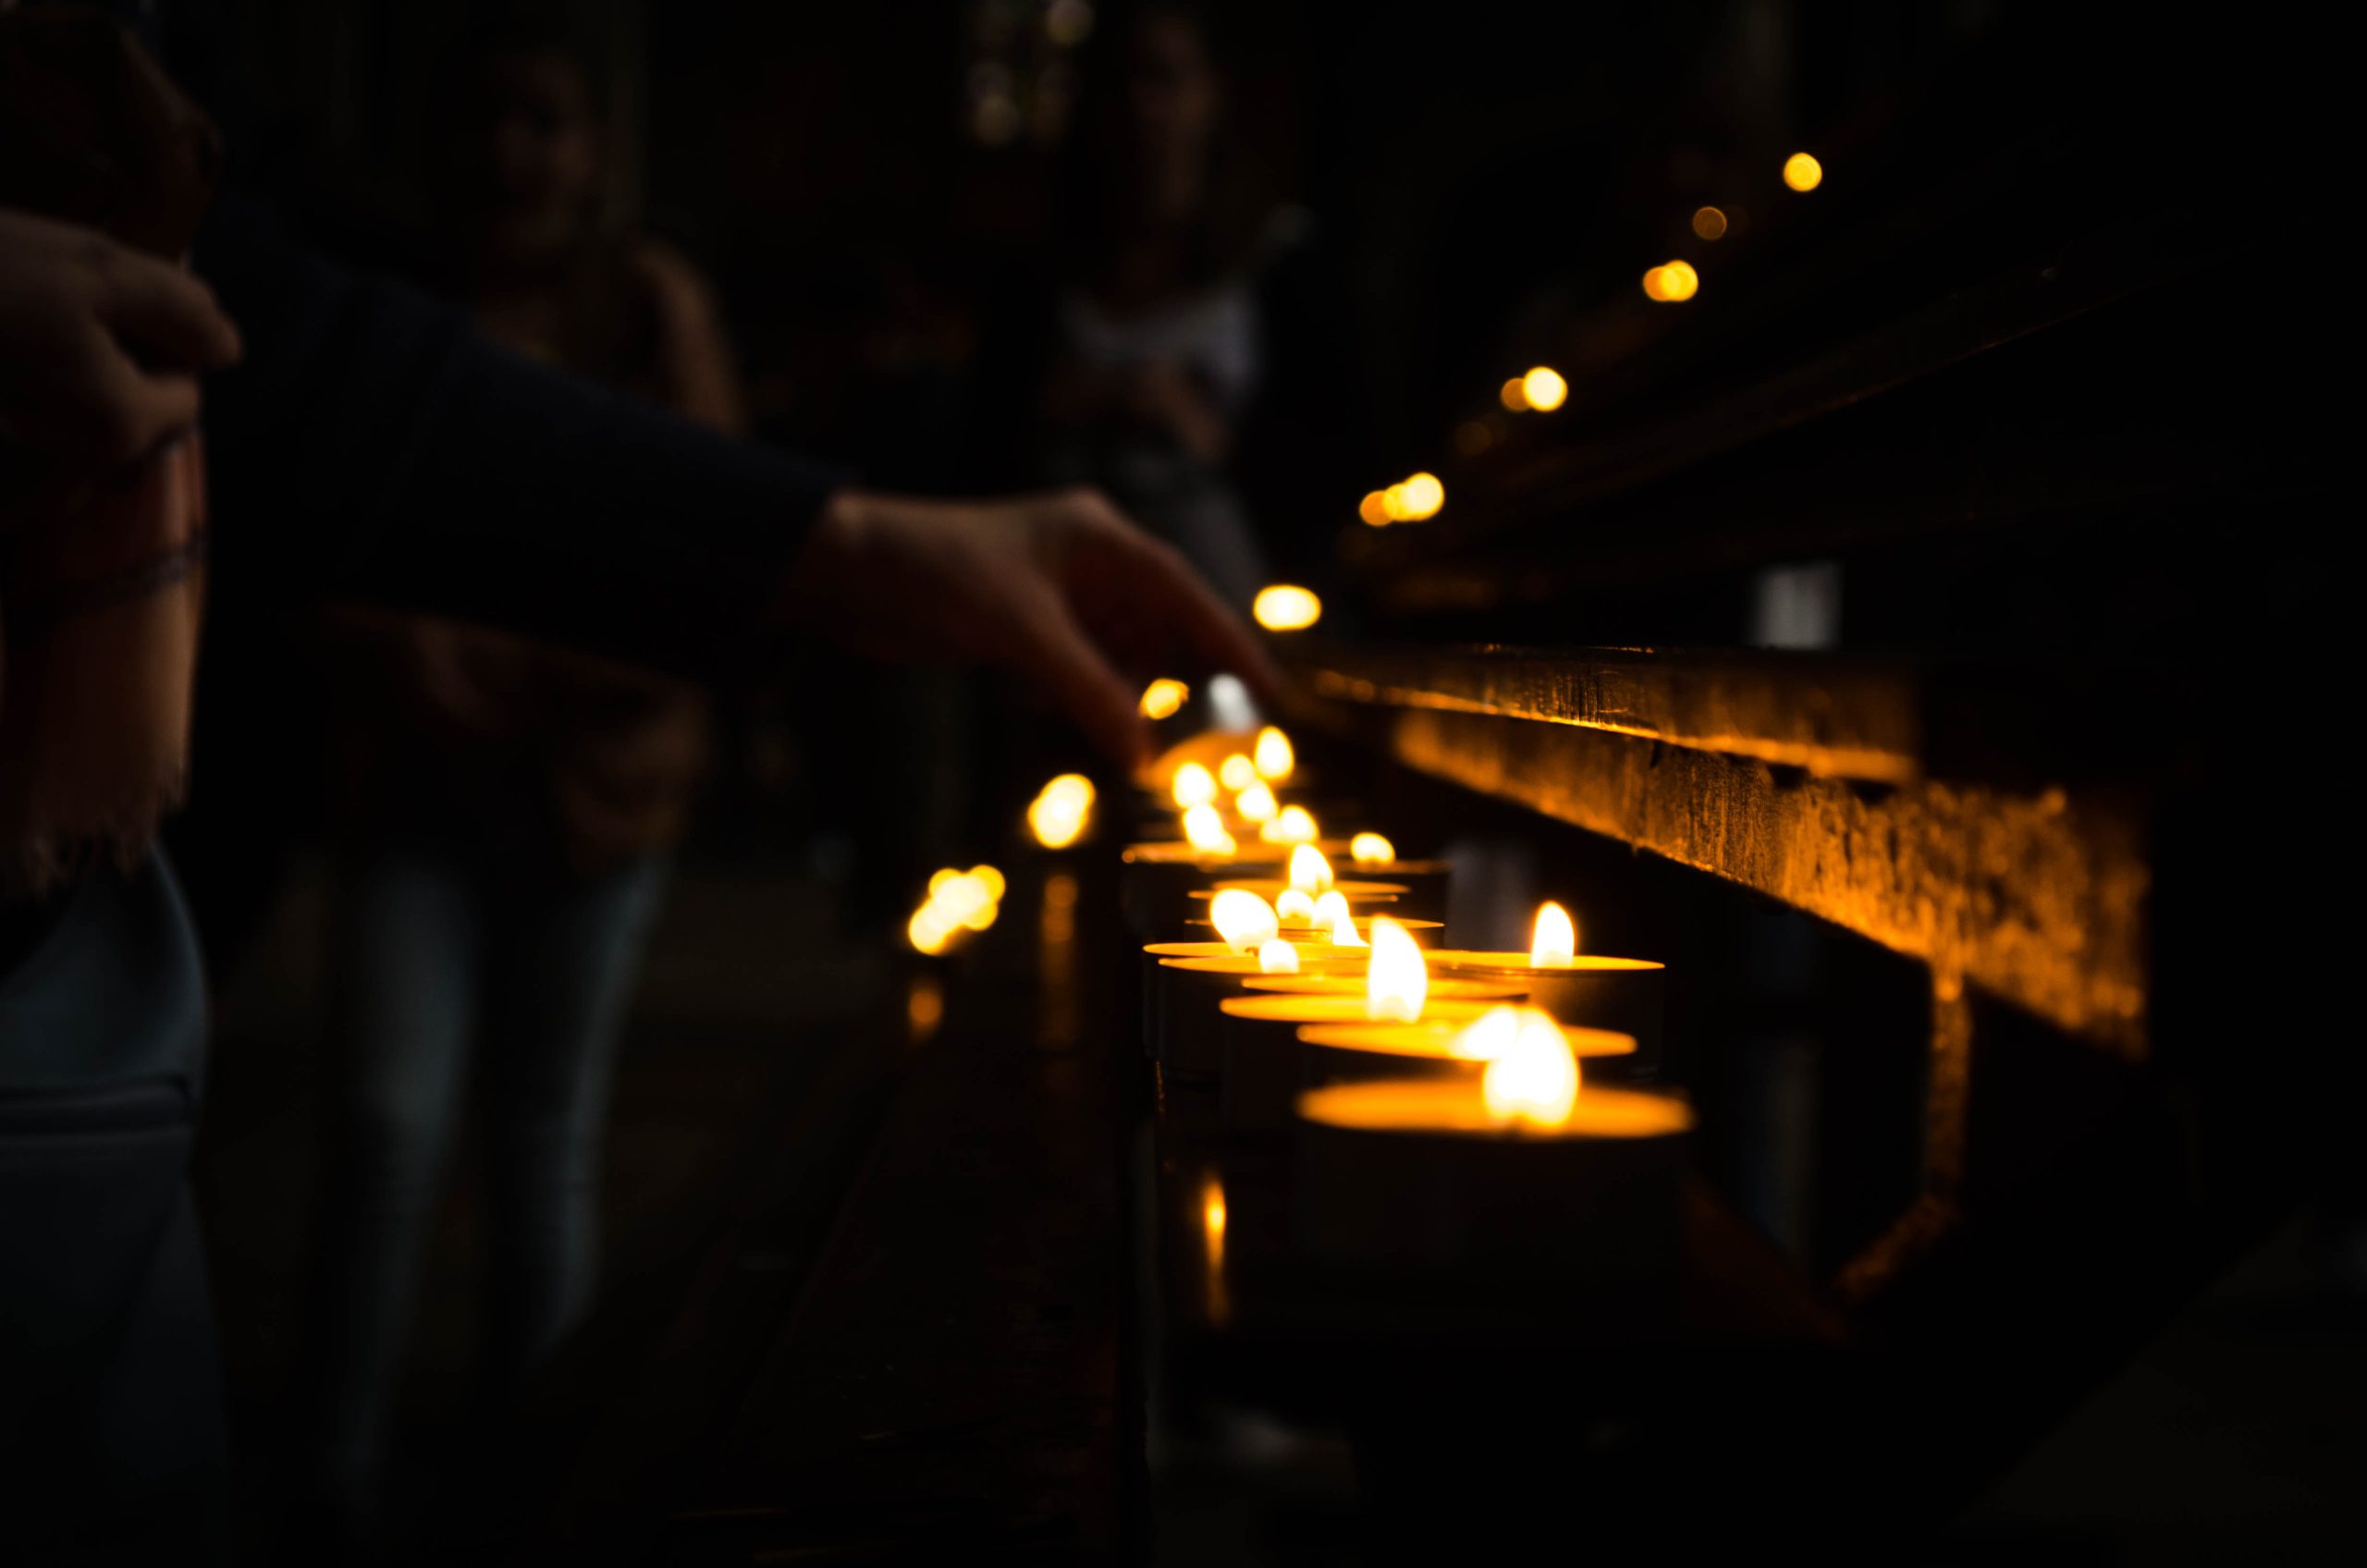 People lighting candles | Photo by Jose Antonio Gallego Vázquez on Unsplash